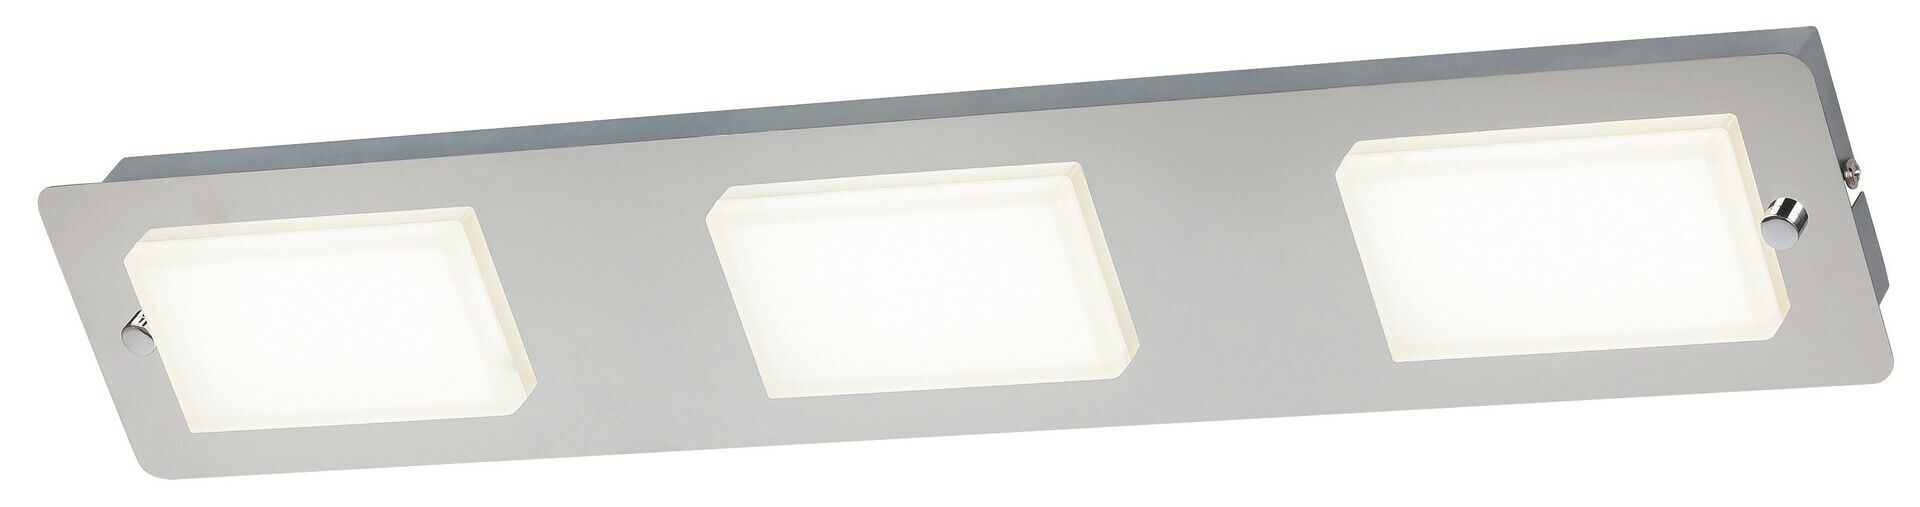 Rabalux koupelnové svítidlo Ruben LED 3x 4,5W IP44 5724